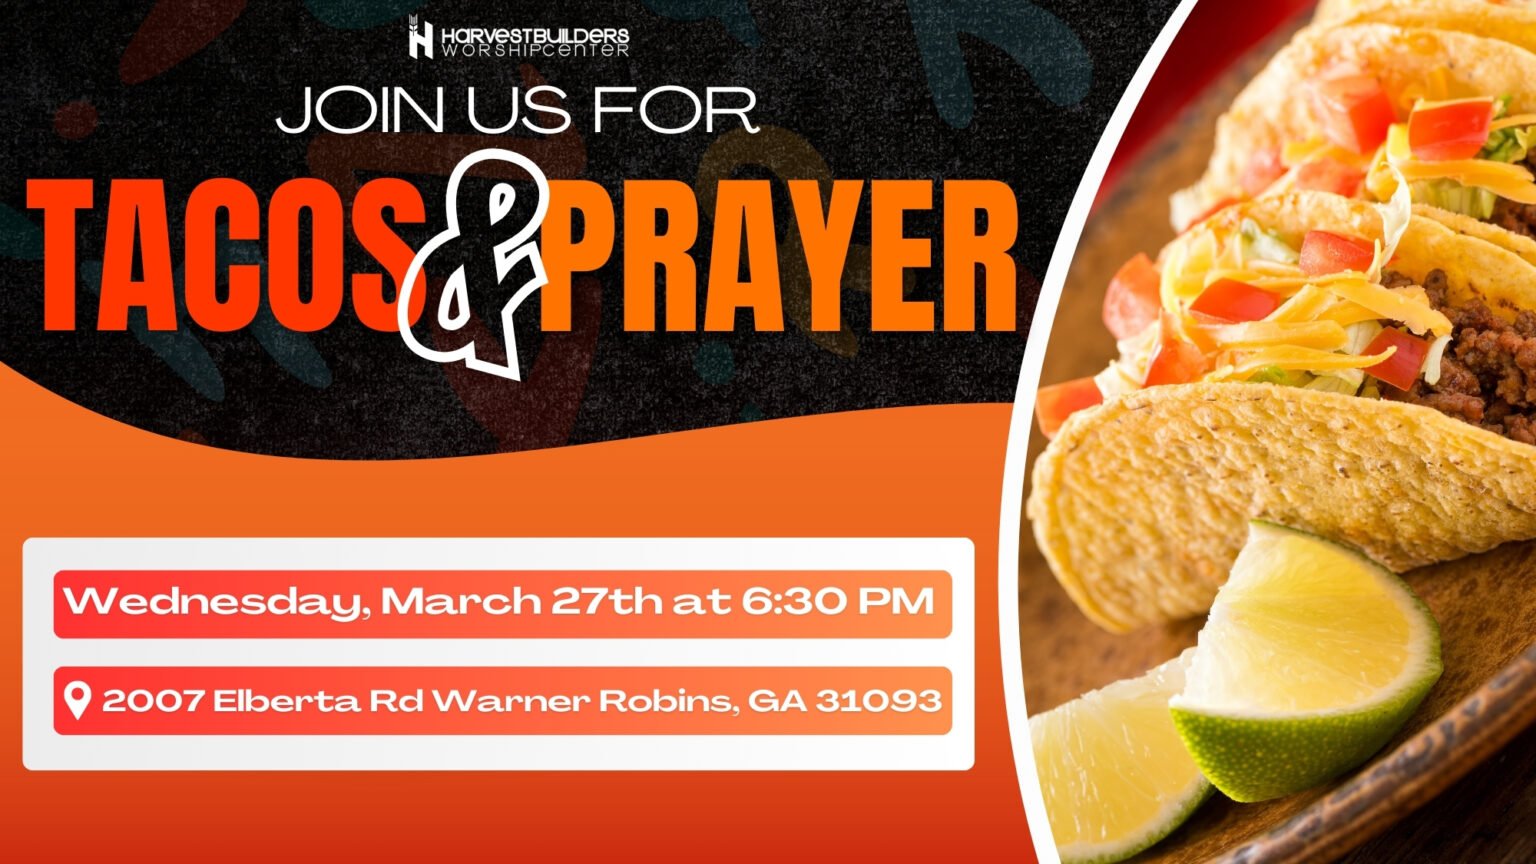 Tacos & Prayer March 27th